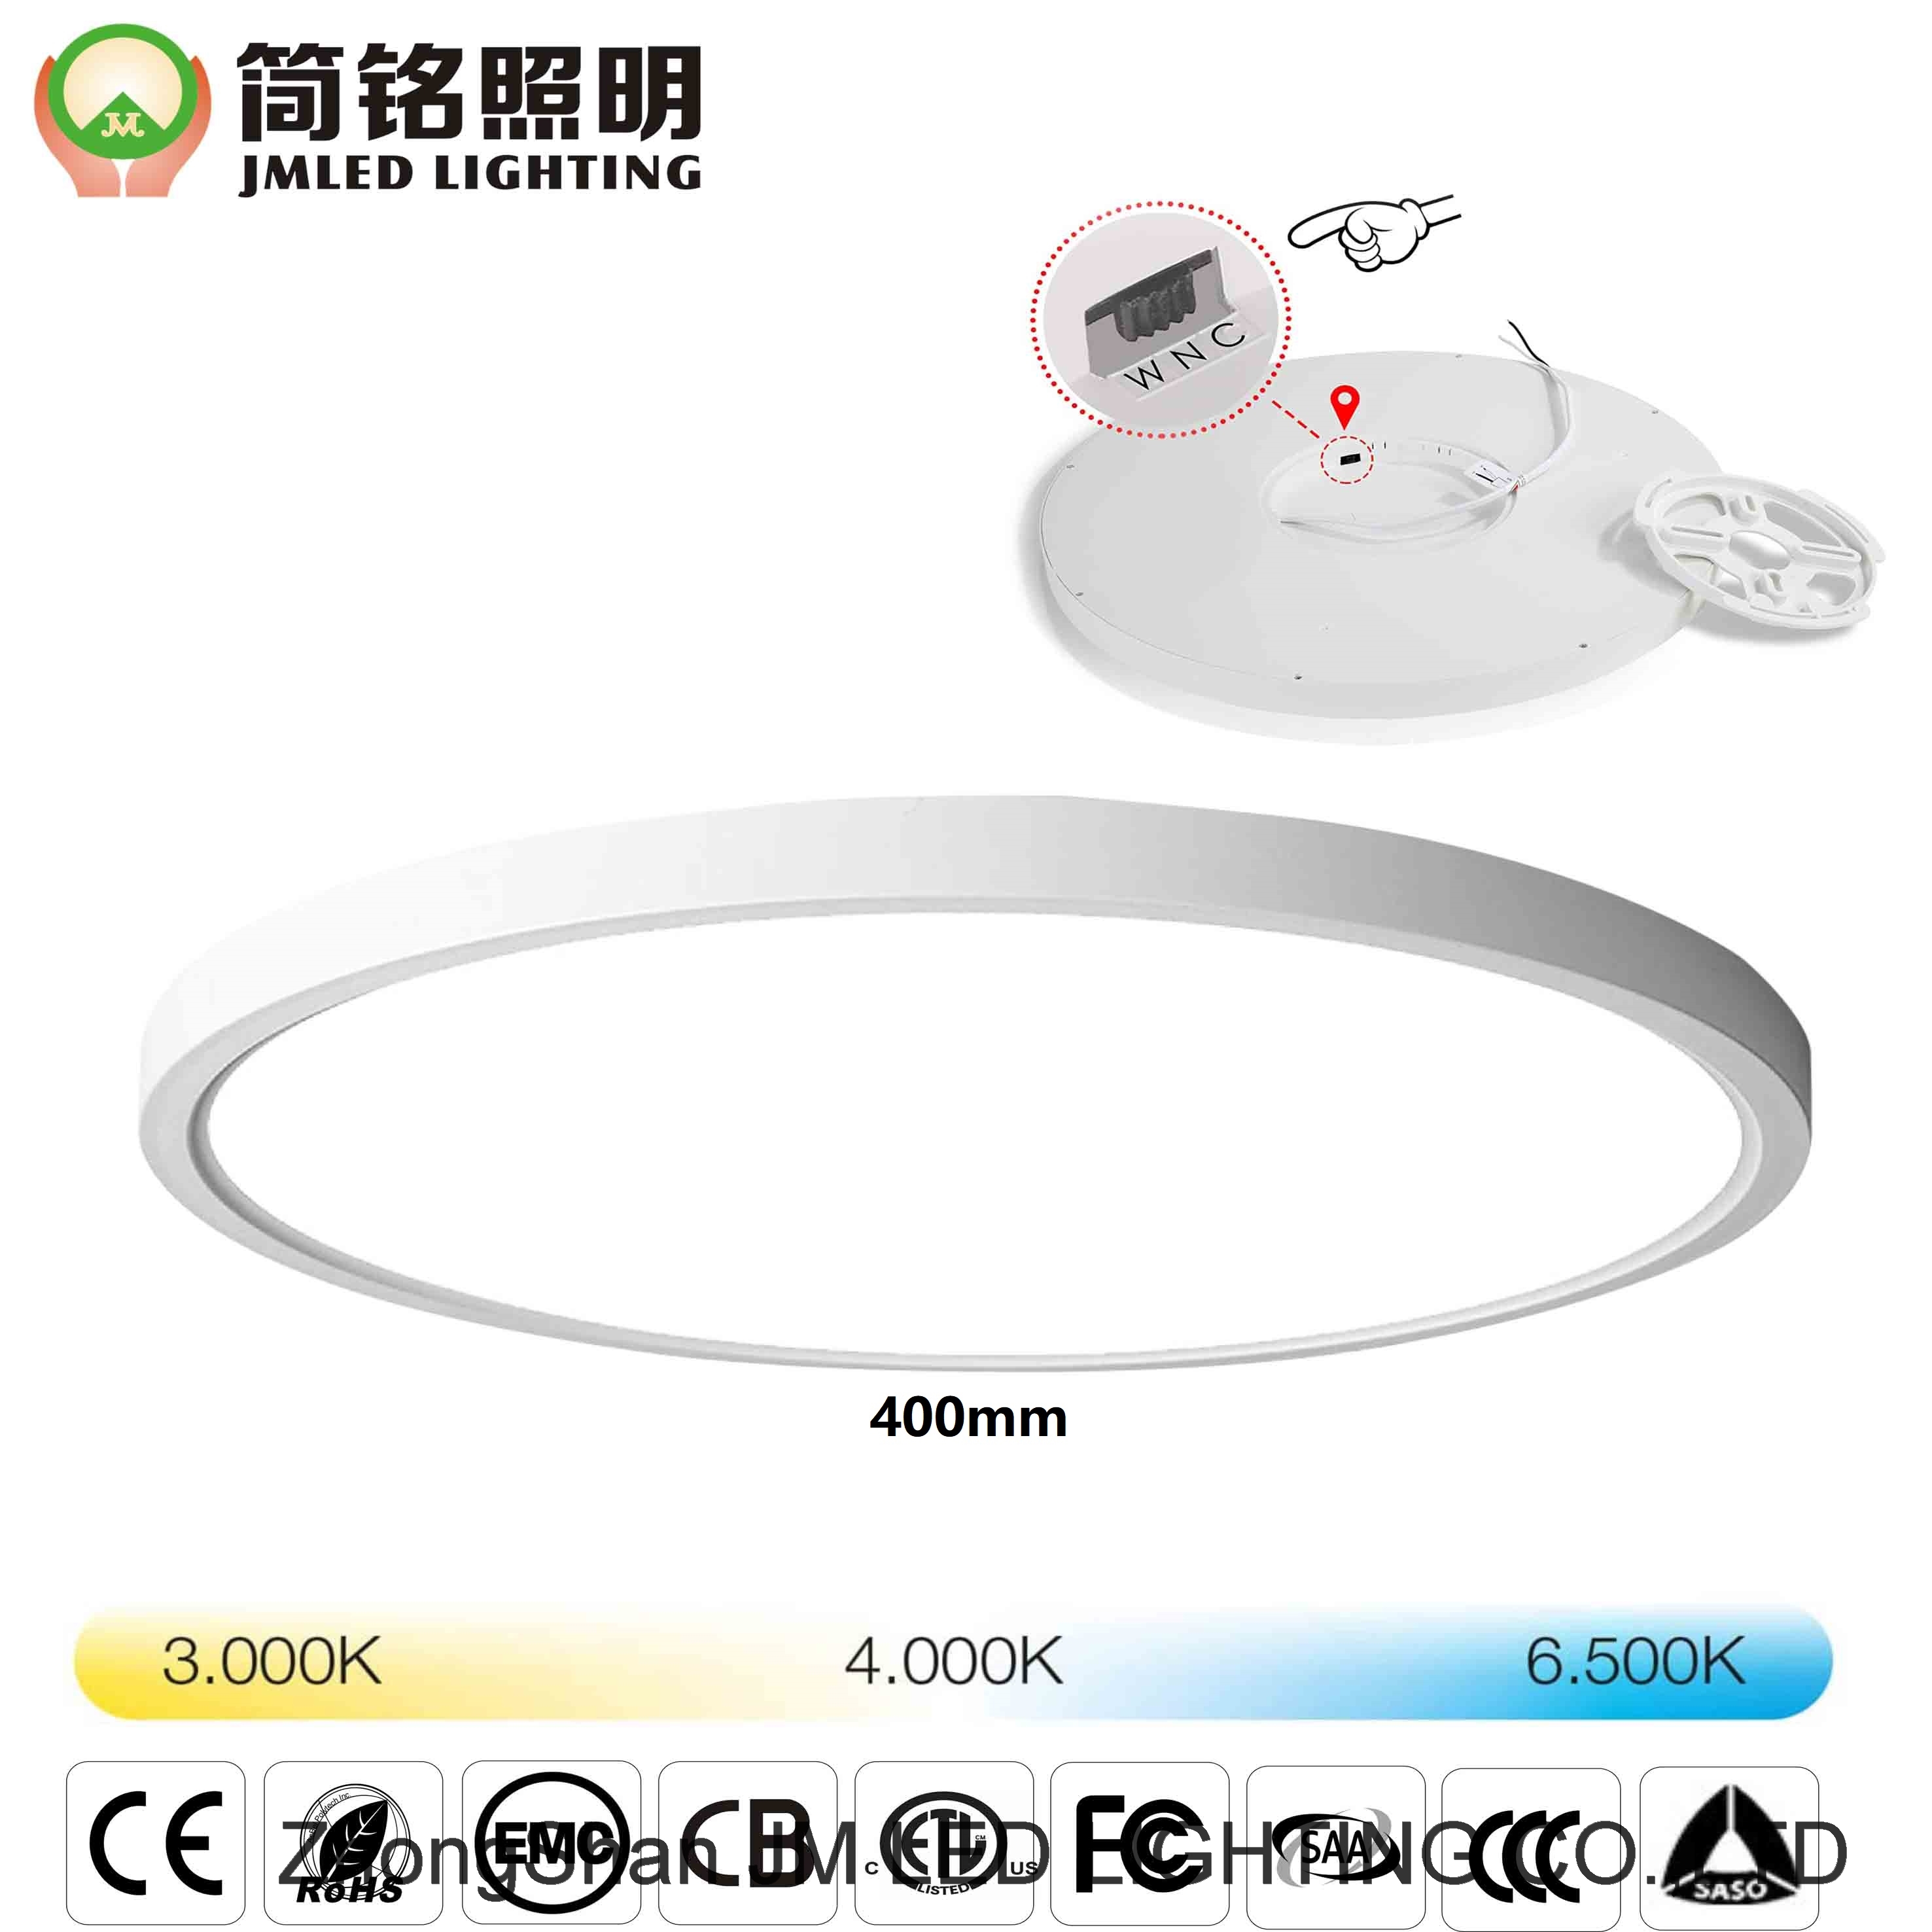 CCT LED ultra-thin ceiling lamp panel light side luminous eye protection lamp 36W